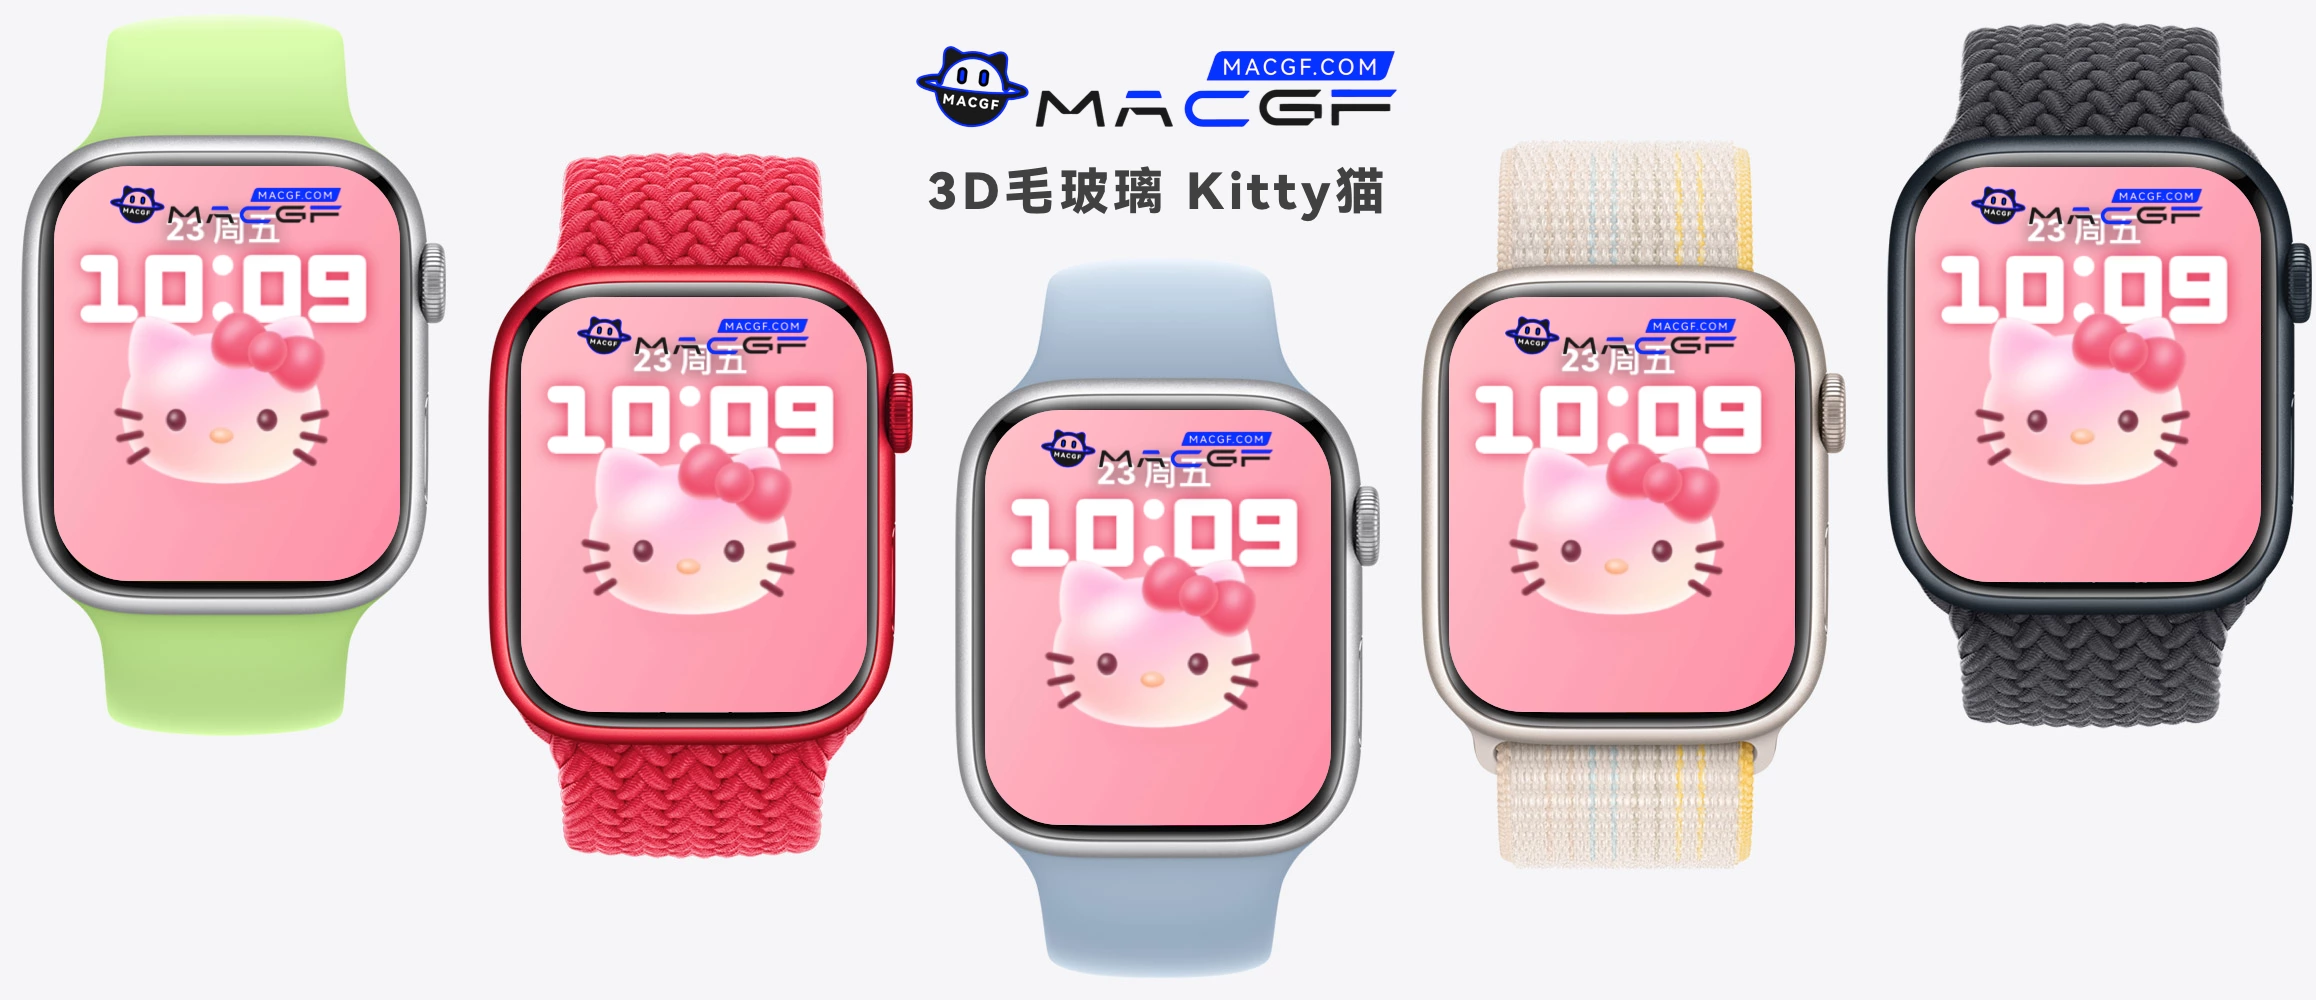 3D毛玻璃 Kitty猫 Apple watch 精美原生表盘 - MACGF